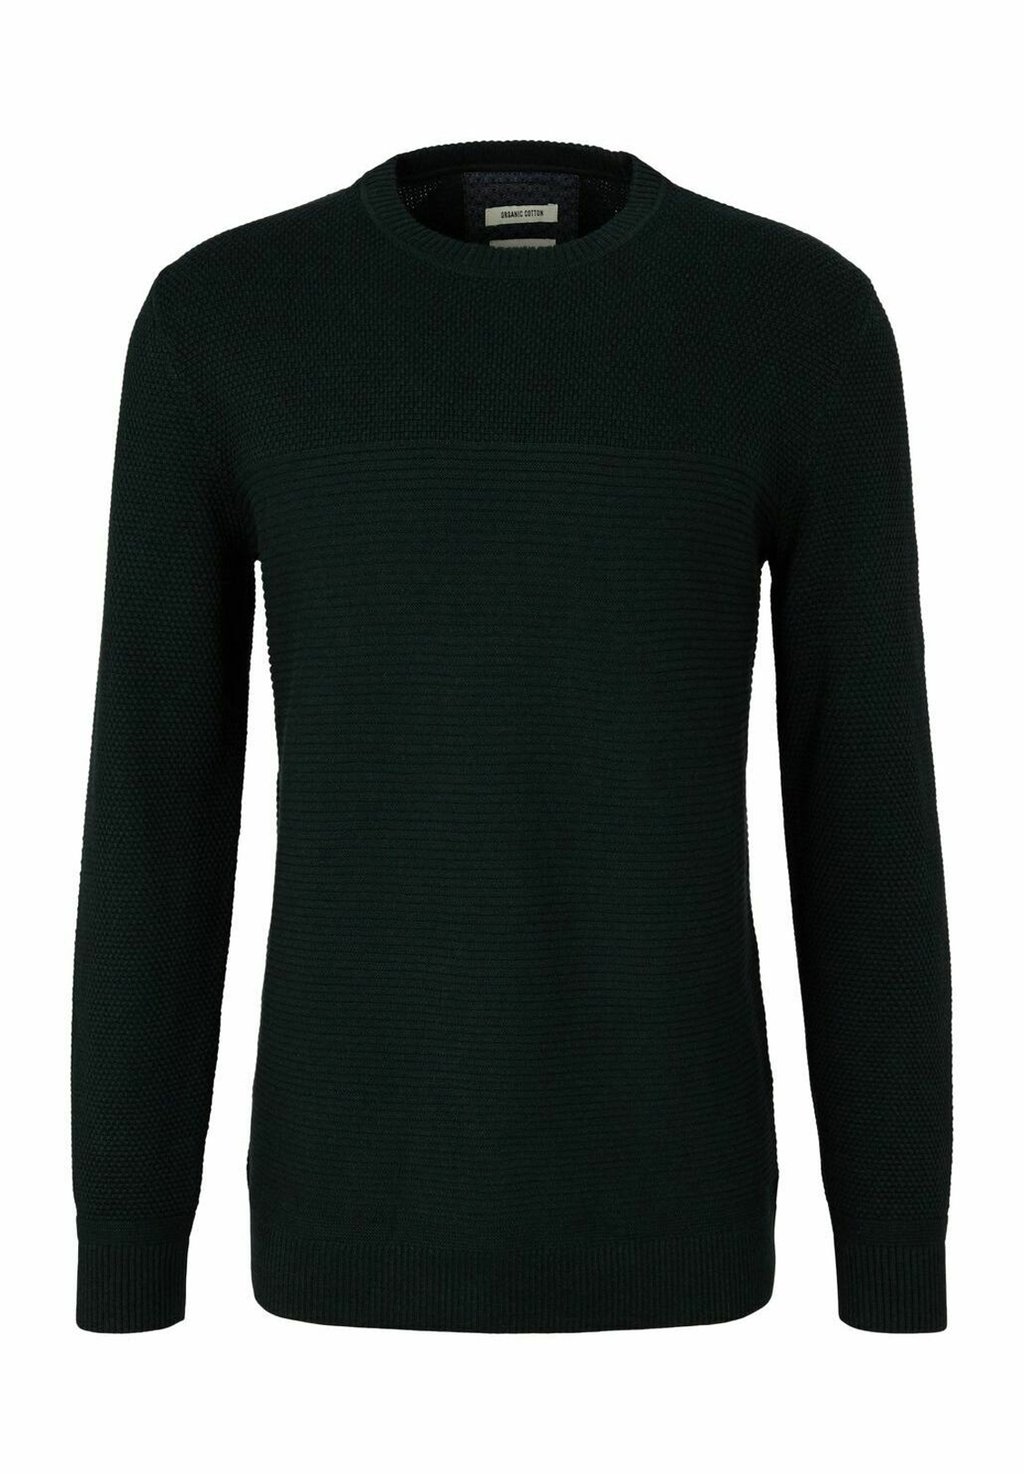 Свитер BASIC STRUCTURED TOM TAILOR, черный свитер tom tailor 1038285 structured basic knit серый